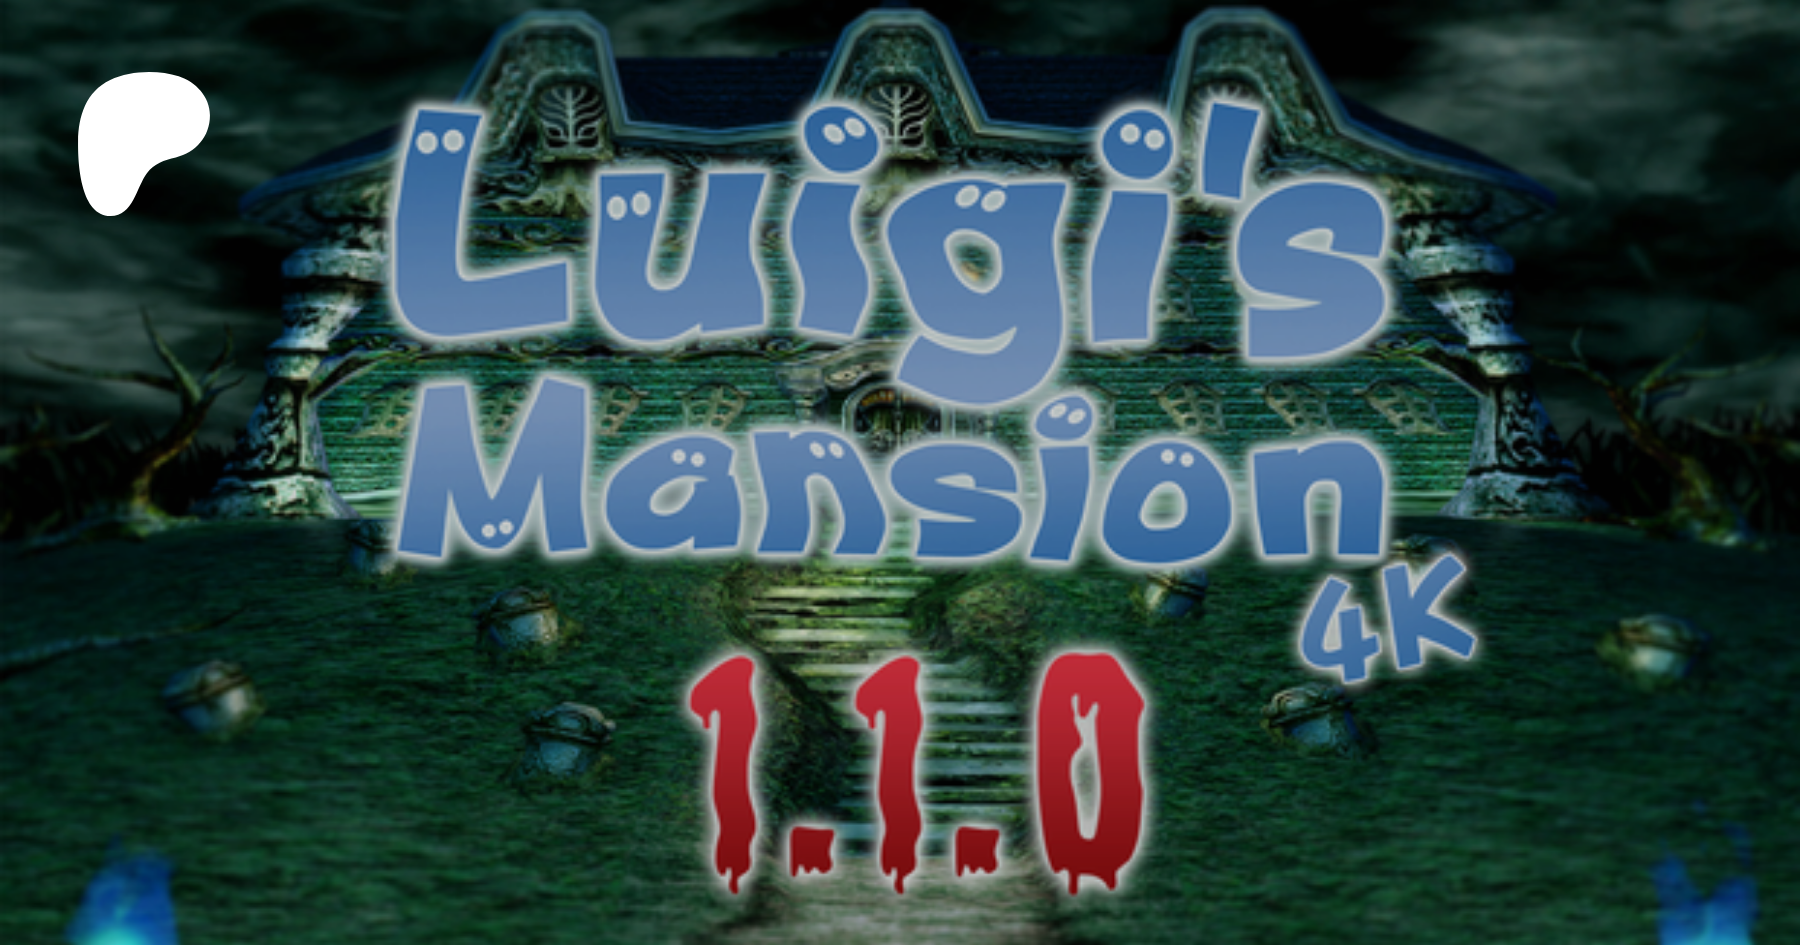 Luigi's Mansion but on PC 